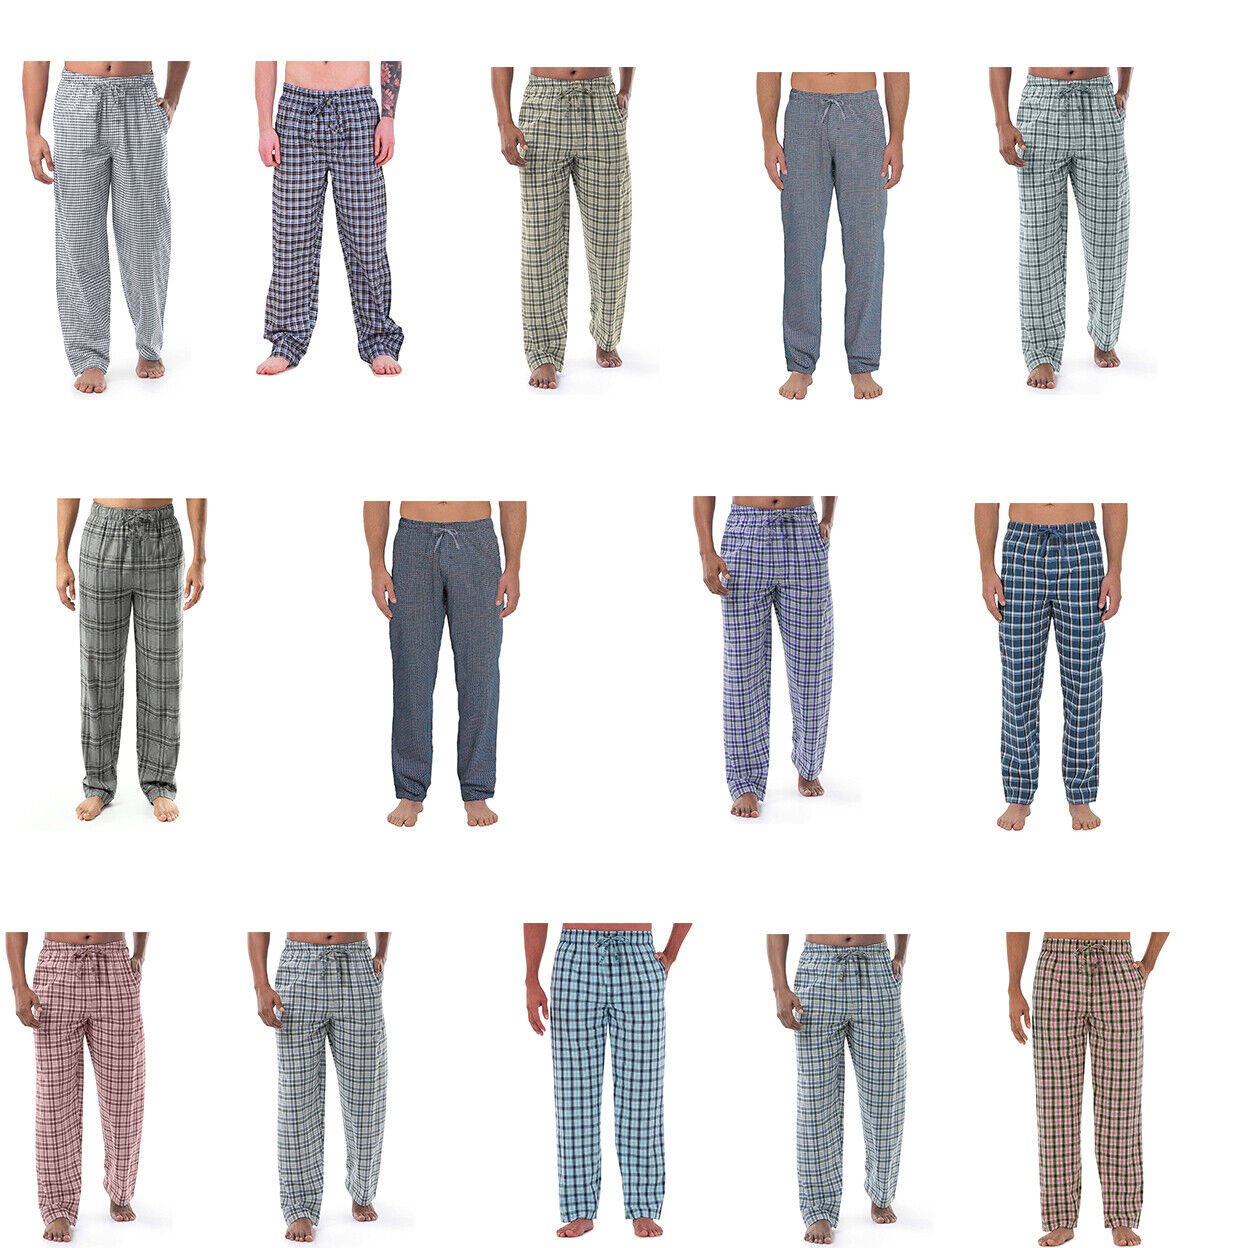 Men's Ultra-Soft Plaid Cotton Jersey Knit Comfy Sleep Lounge Pajama Pants - Beige, Large